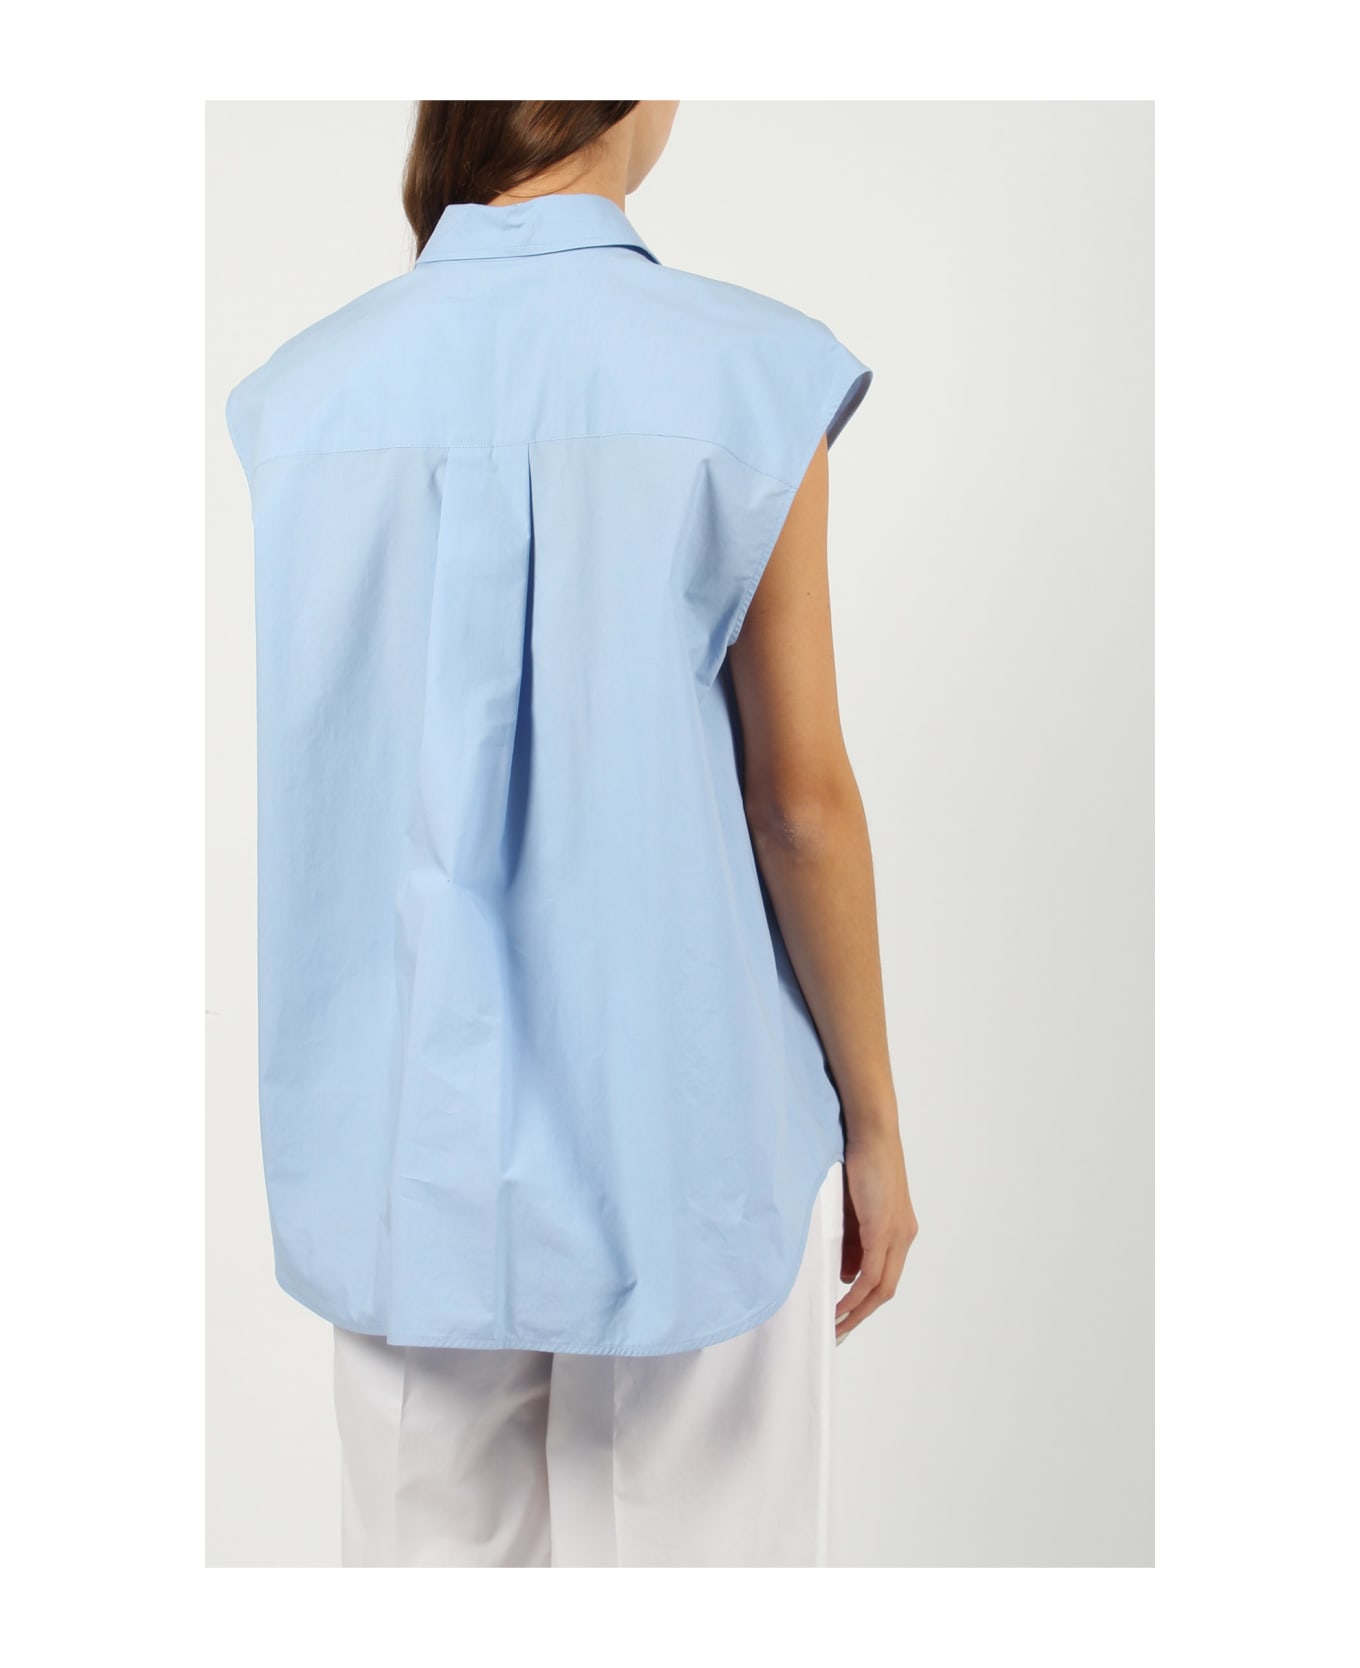 Parosh Canyox Lace Embroidery Shirt - Blue